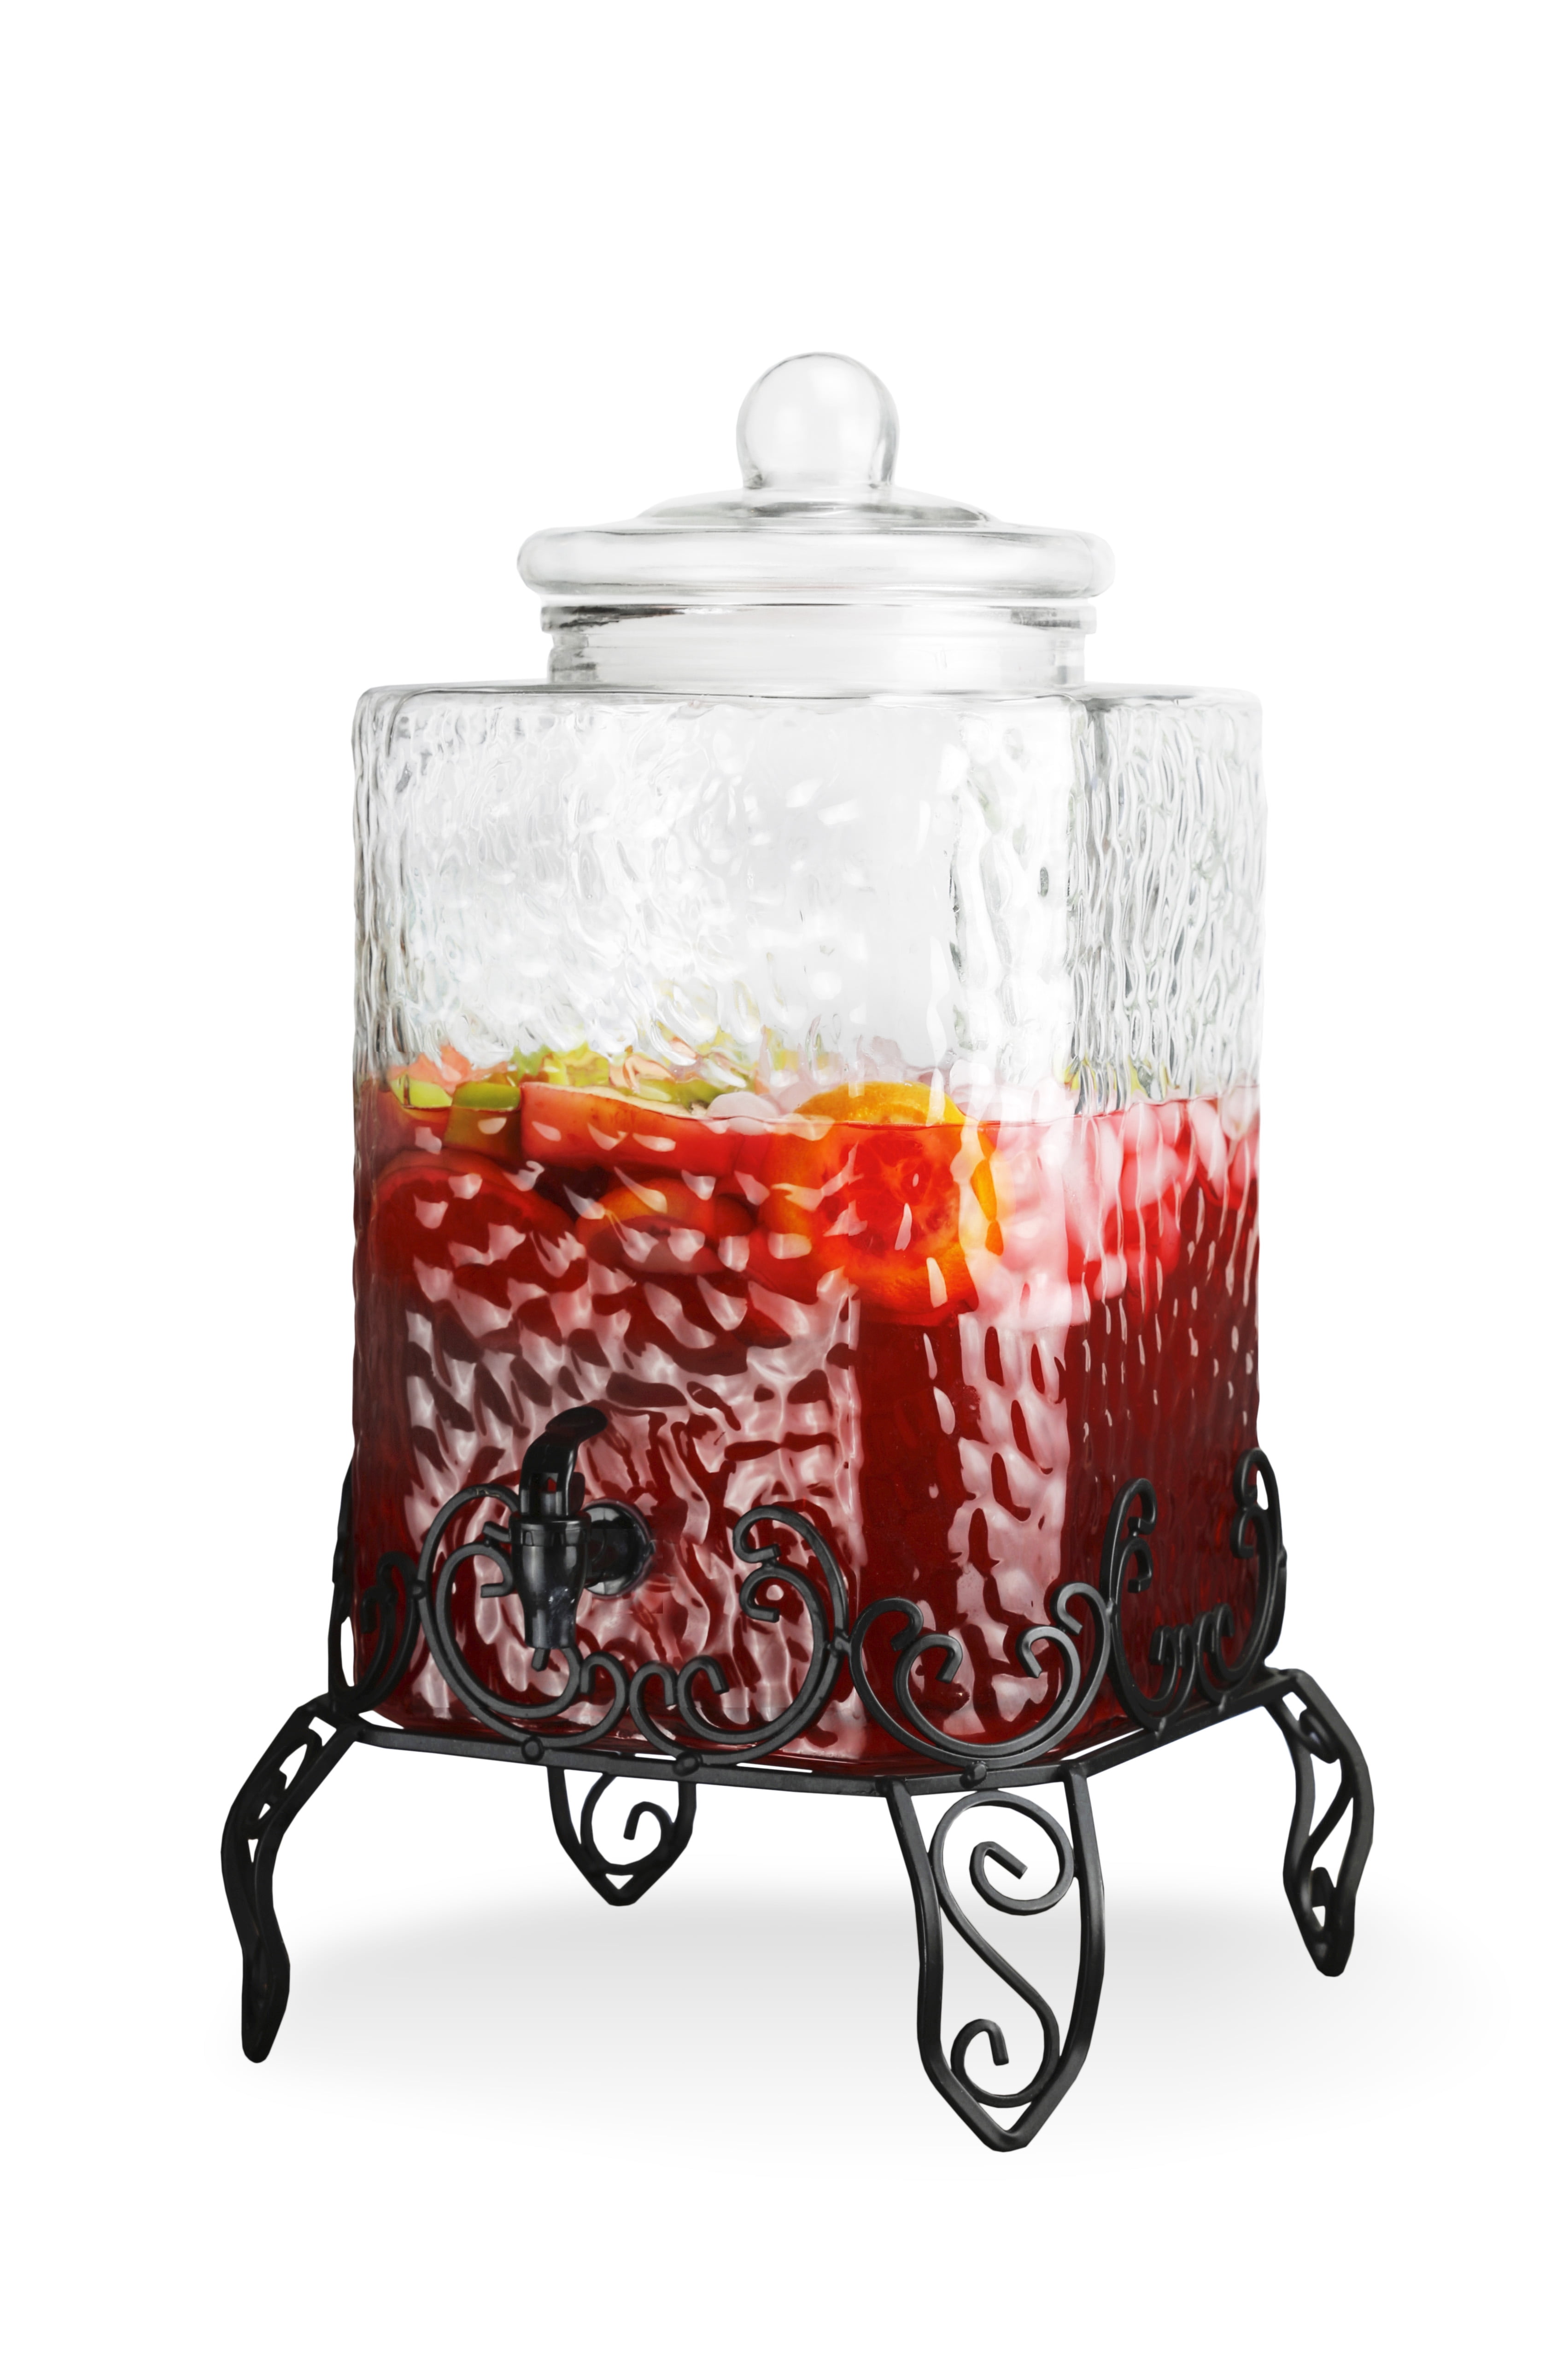 Style Setter Beverage Dispenser w/Stand (Set of 2), 1.5 Gallon Large  Countertop Glass Drink Dispenser w/Spigot, Party Drink Dispenser for Sweet  Tea